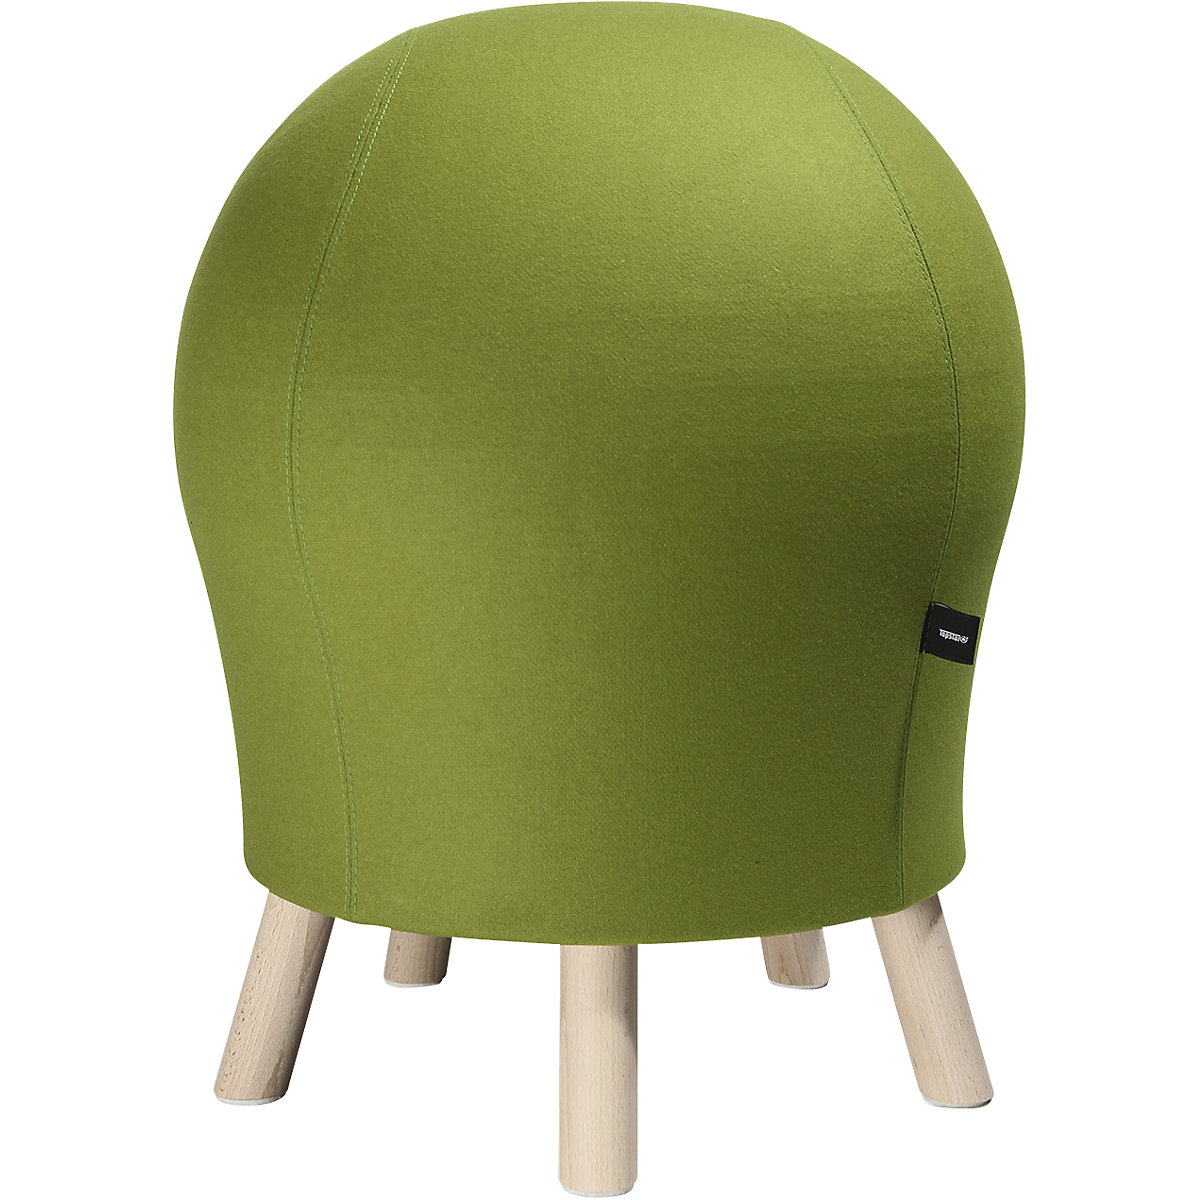 Fitness stolička SITNESS 5 ALPINE – Topstar, výška sedáku cca 620 mm, potah zelený-9